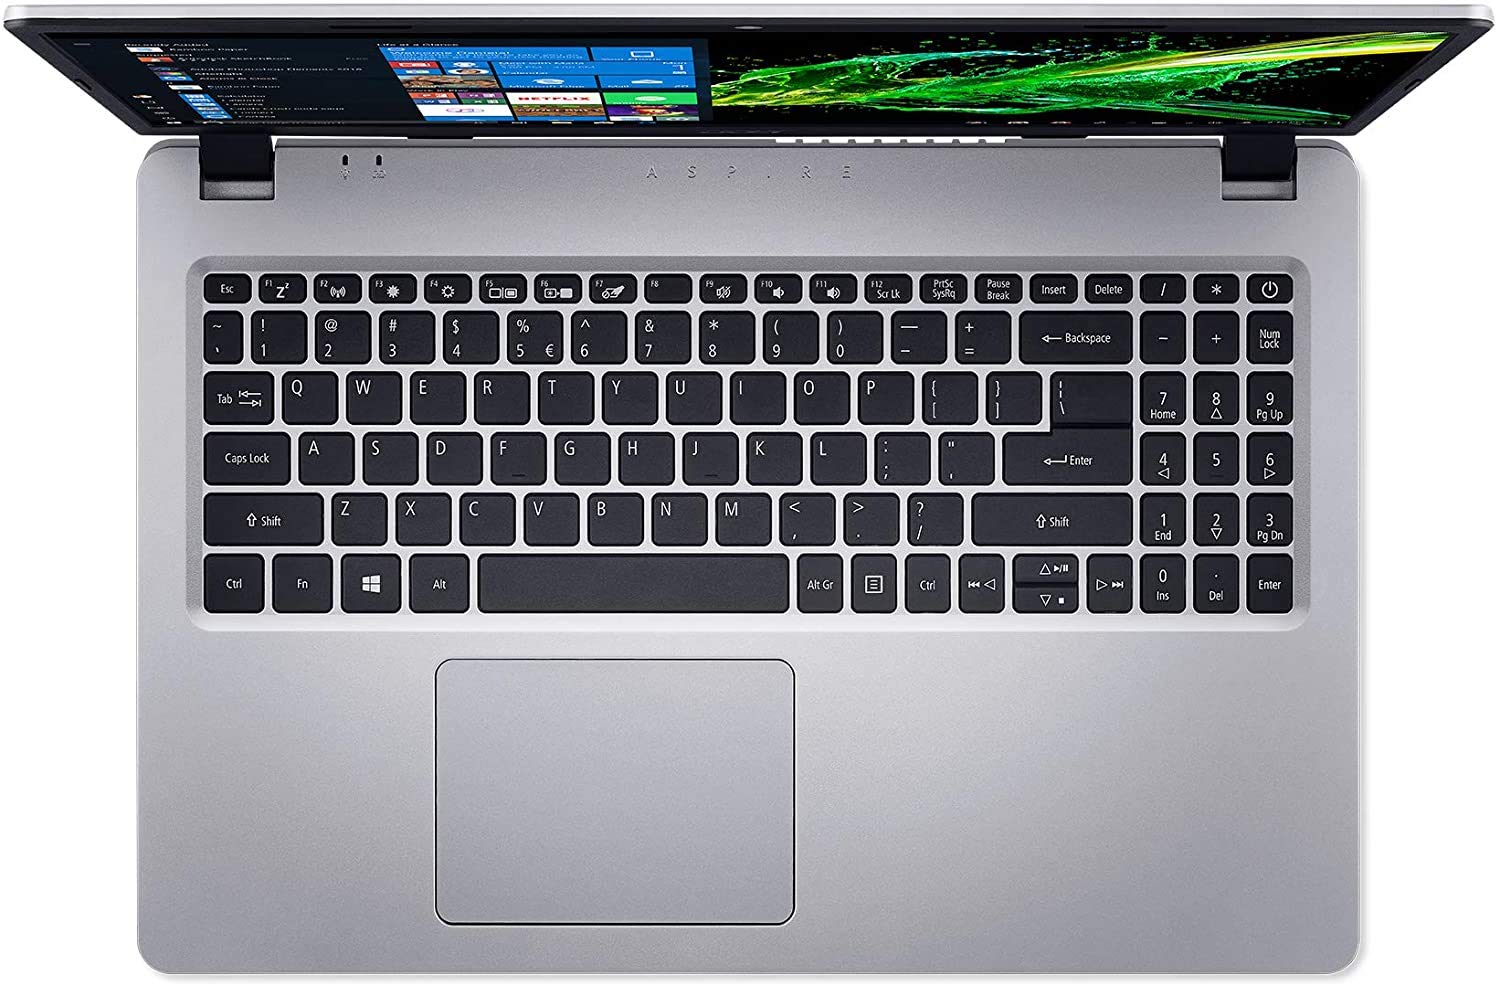 2021 Newest Acer Aspire 5 Slim Laptop, 15.6 inches Full HD IPS Display, AMD Ryzen 3 3200U, Vega 3 Graphics, 8GB DDR4, 128GB SSD, Backlit Keyboard, Windows 10 + Nly MP